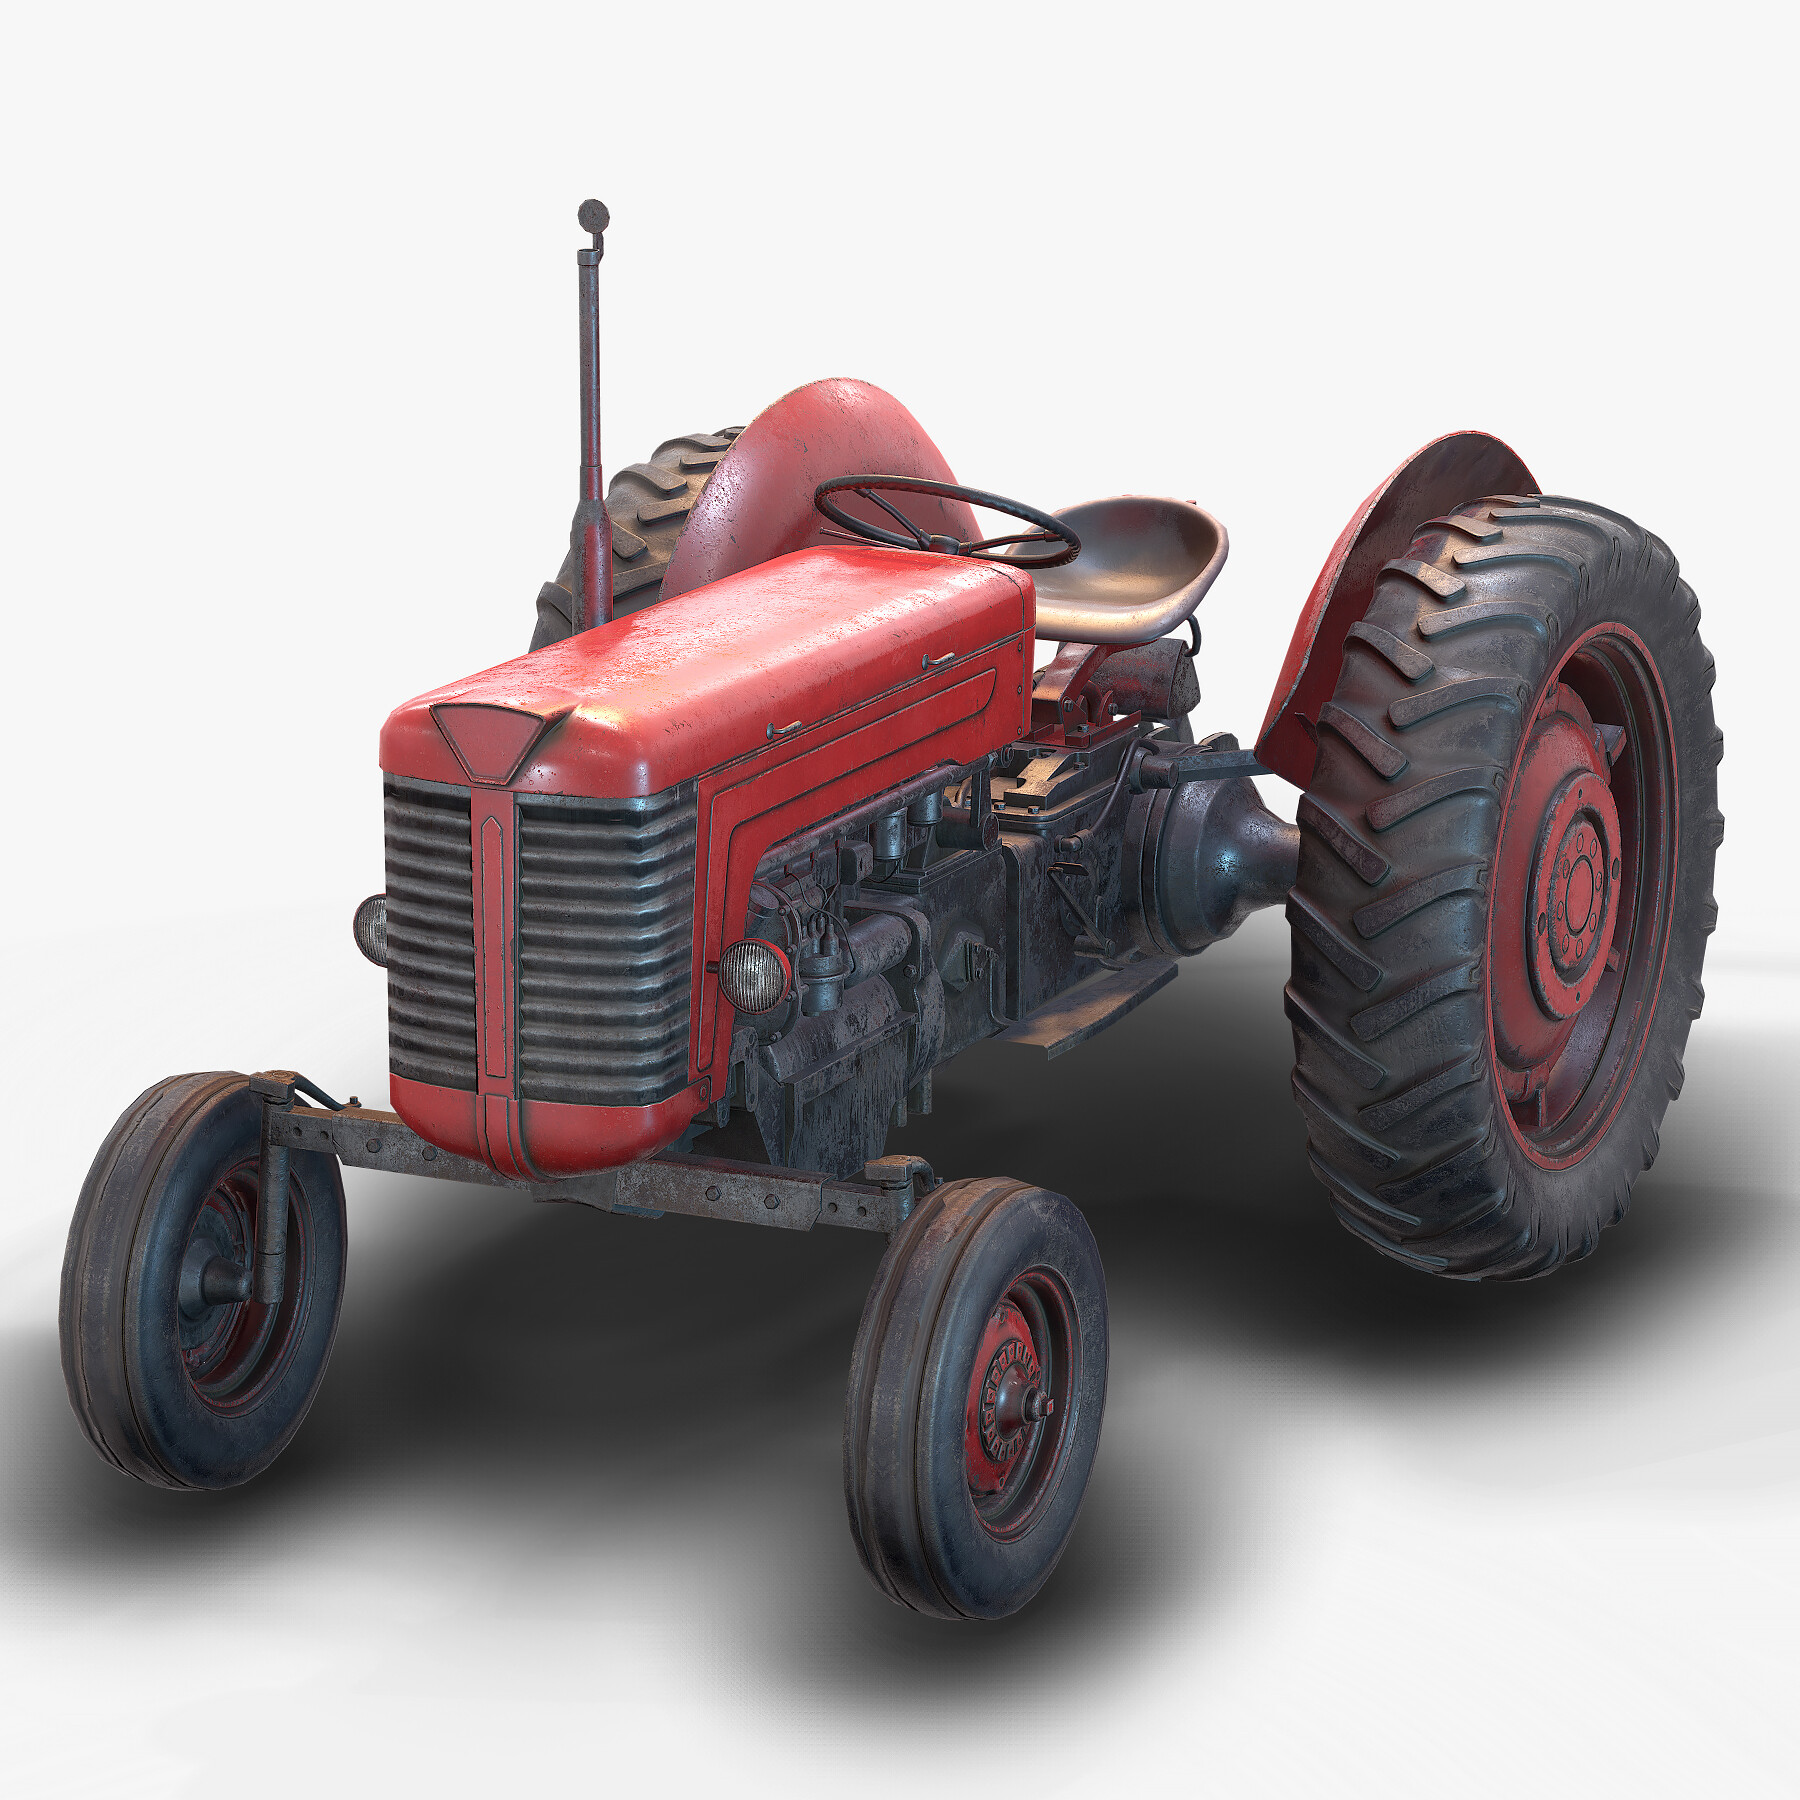 Tractor 3. Трактор Low Poly. Сатисфектори трактор 3d модель. Модель трактора 3 d Low Poly. Трактор 3d Max.